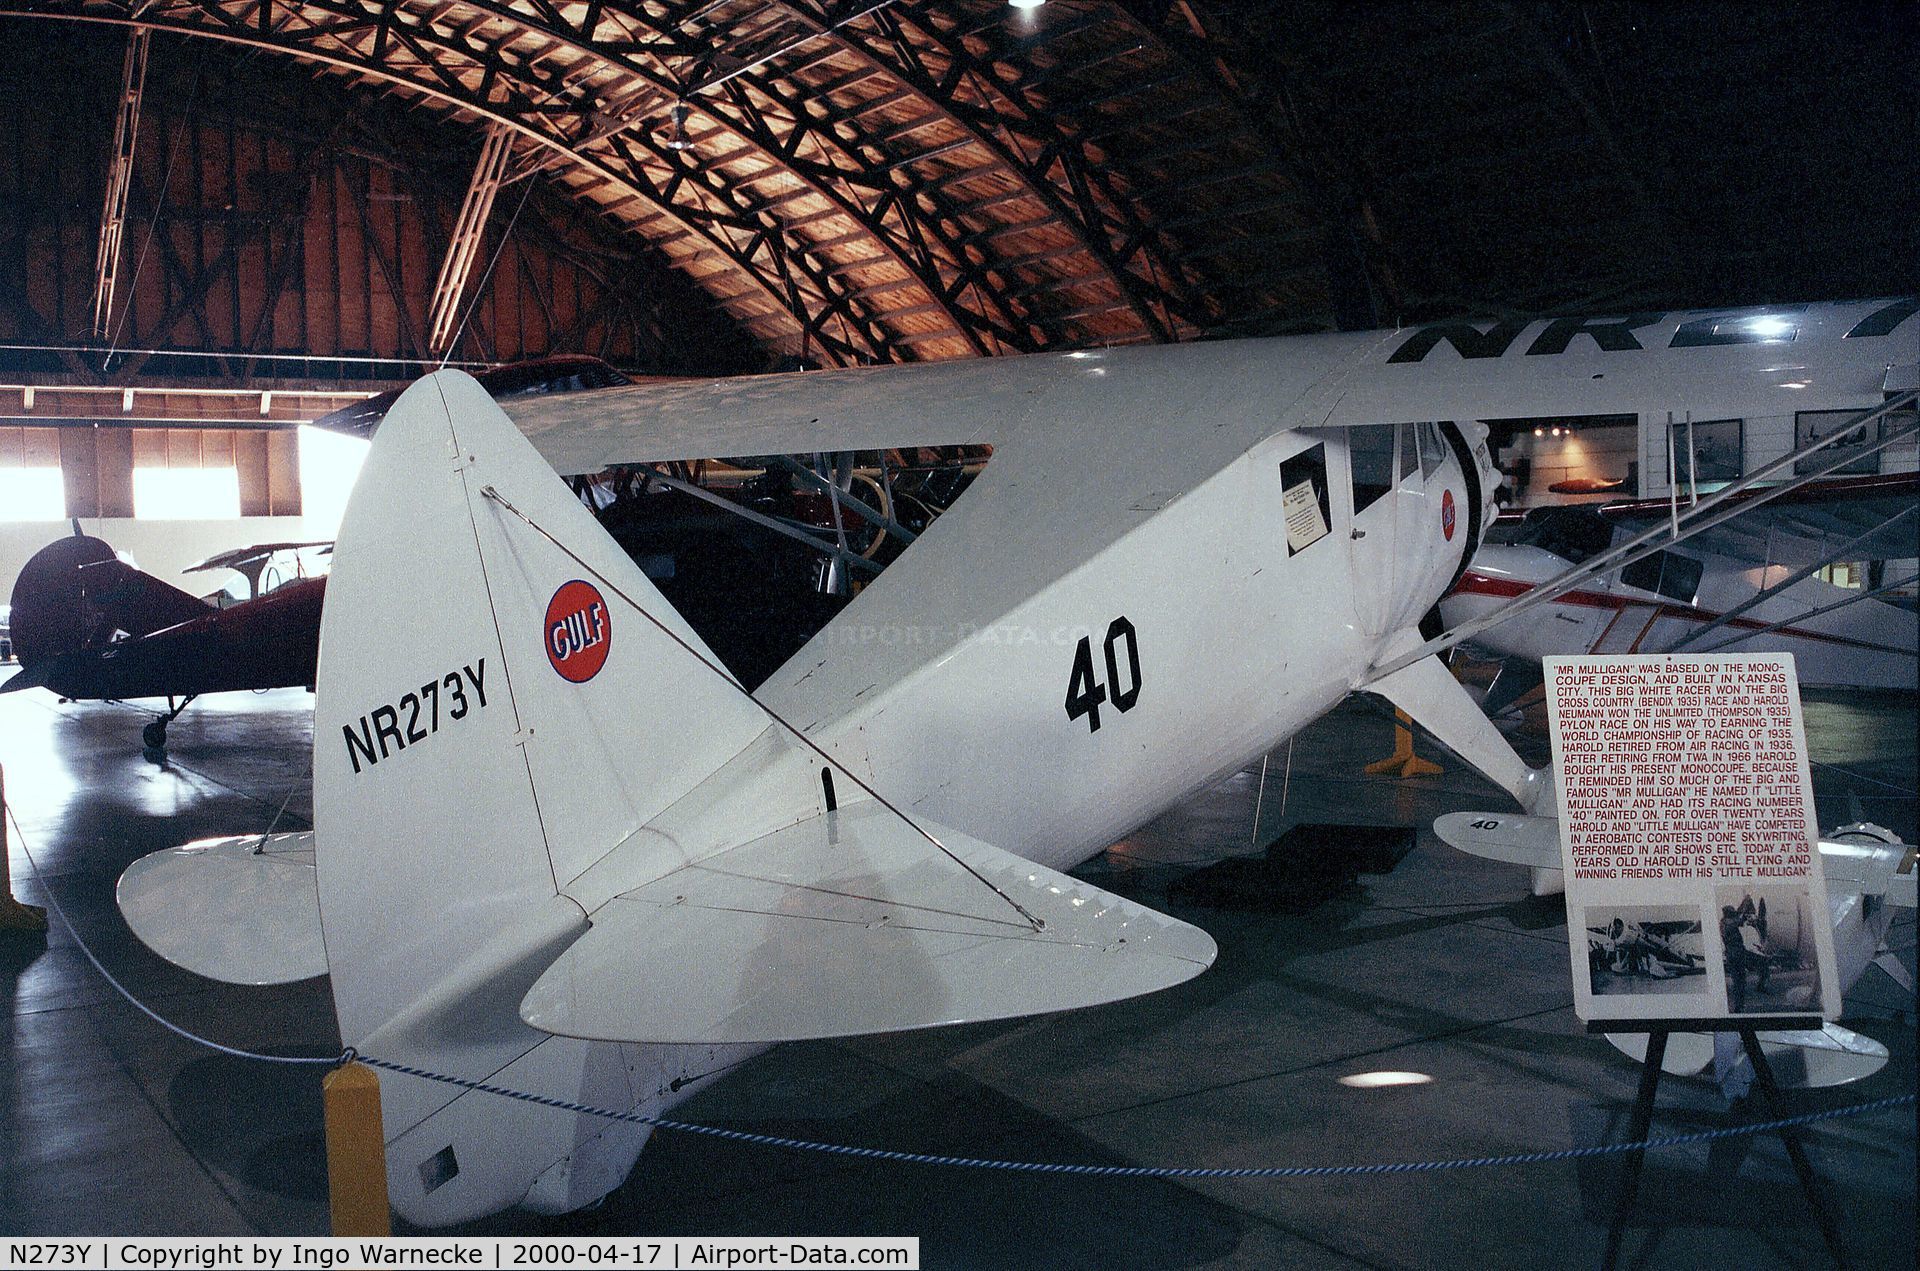 N273Y, 1985 Howard Aircraft DGA-6 Replica C/N JRY-02, Howard (J R Younkin) DGA-6 replica at the Arkansas Air Museum, Fayetteville AR